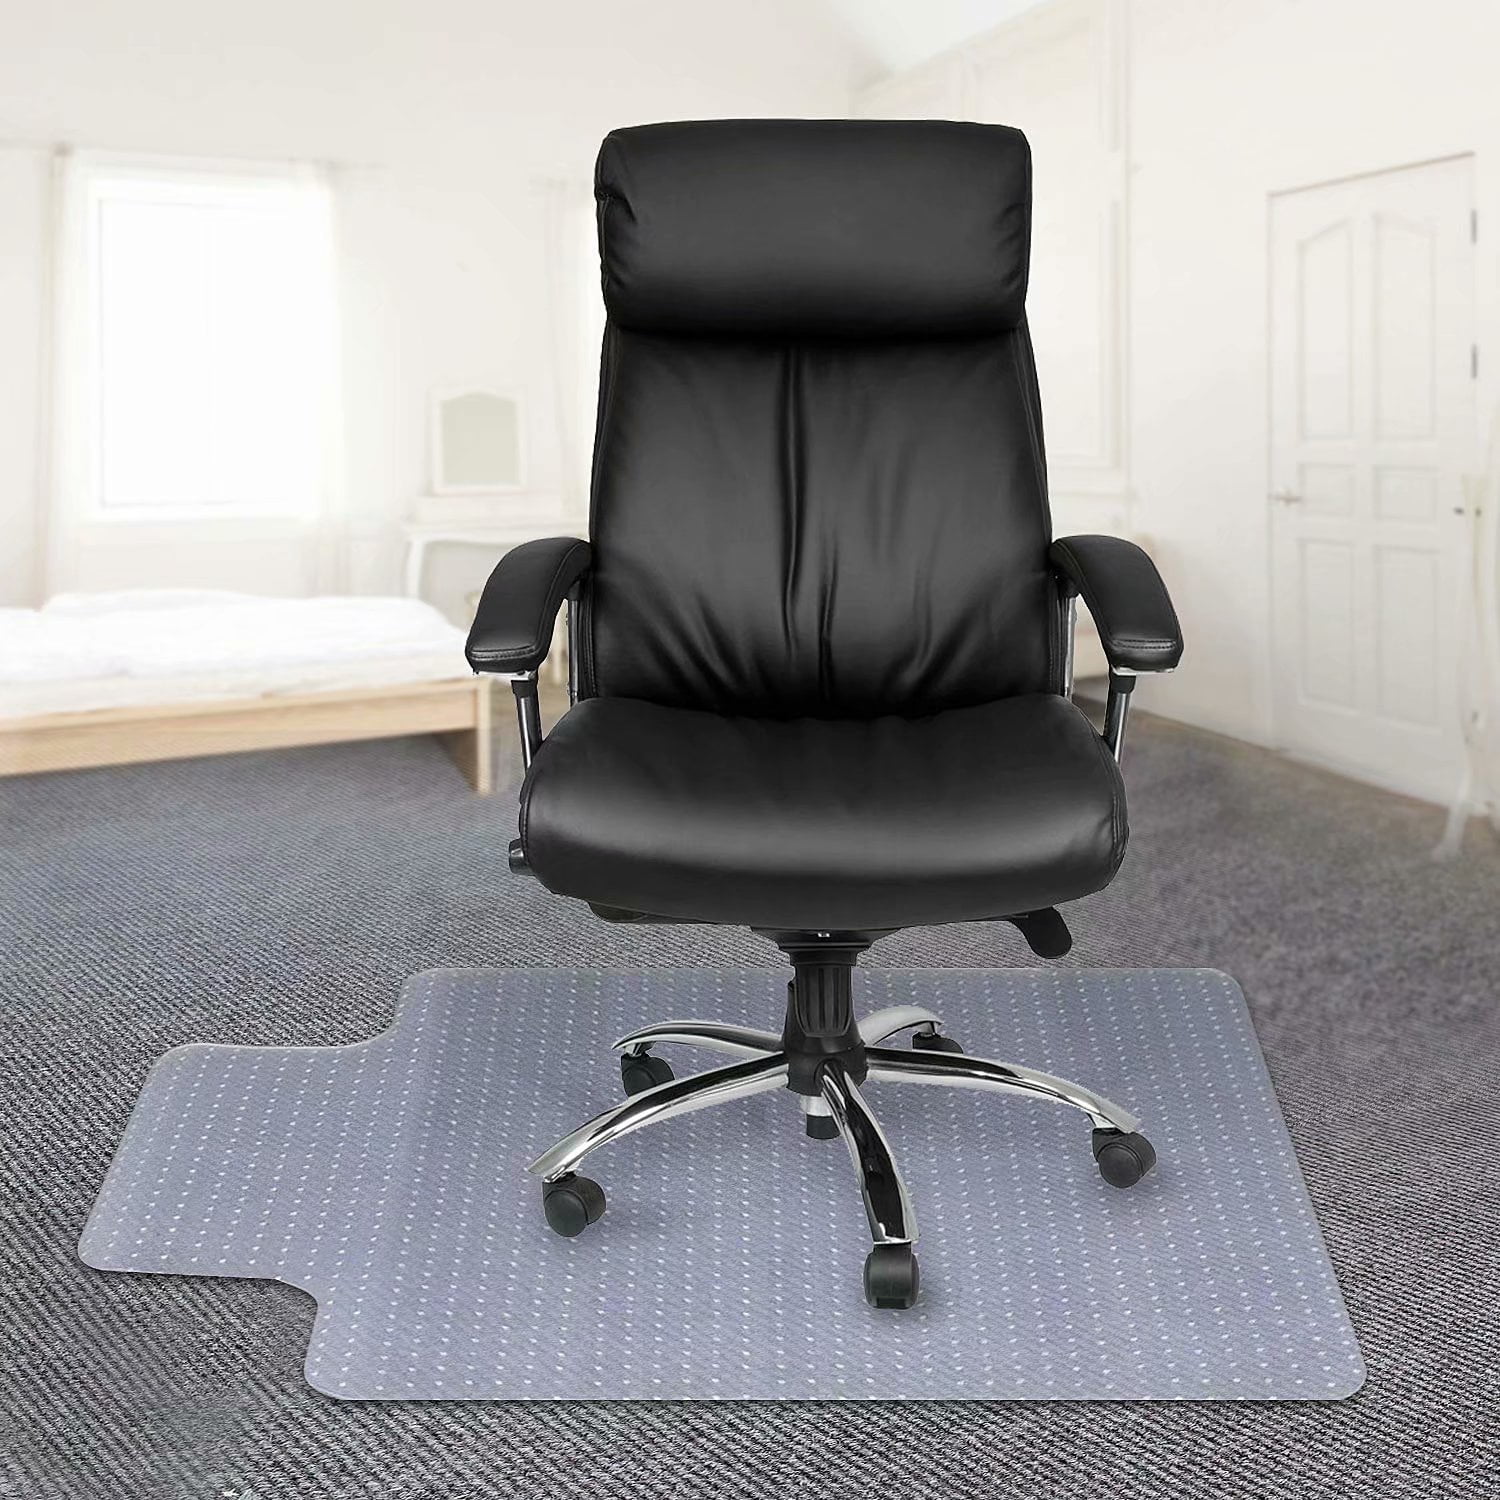 Office Chair Mat For Hard Floor 36 X, Desk Chair Pads For Hardwood Floors